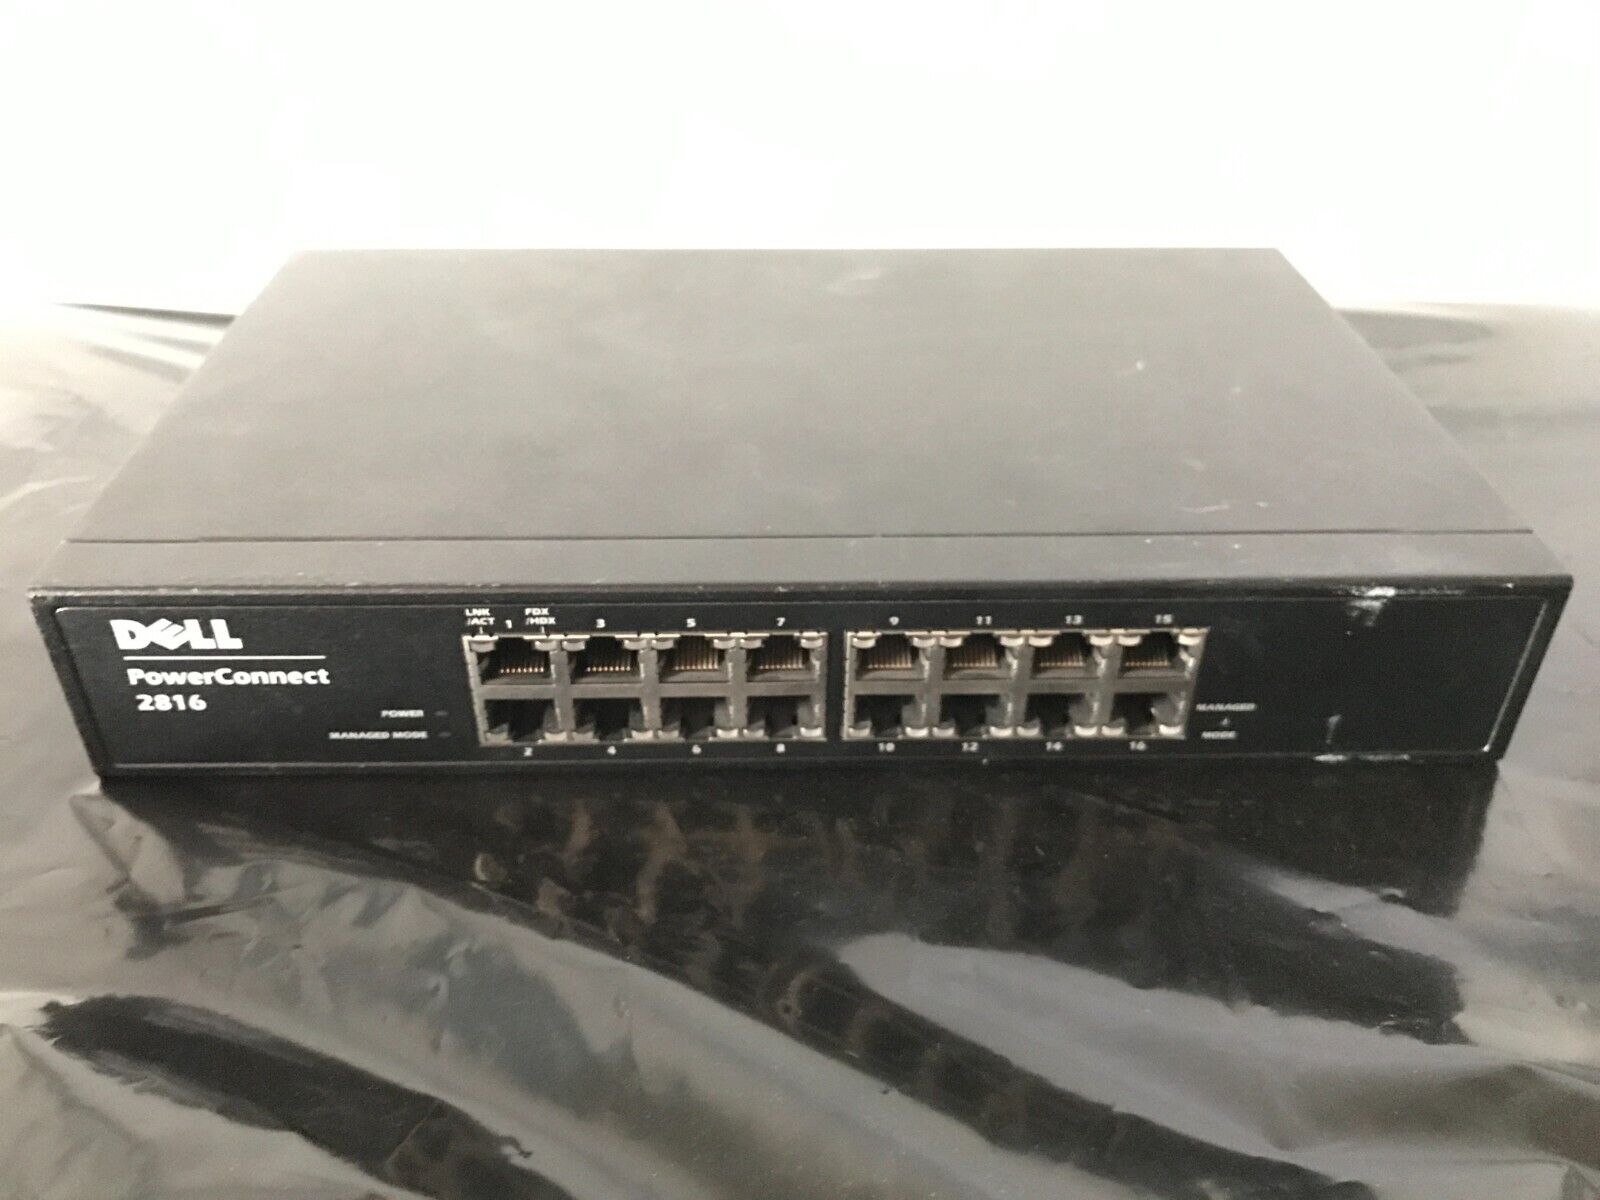 Dell PowerConnect 2816 16-Port L3 Gigabit-Switch